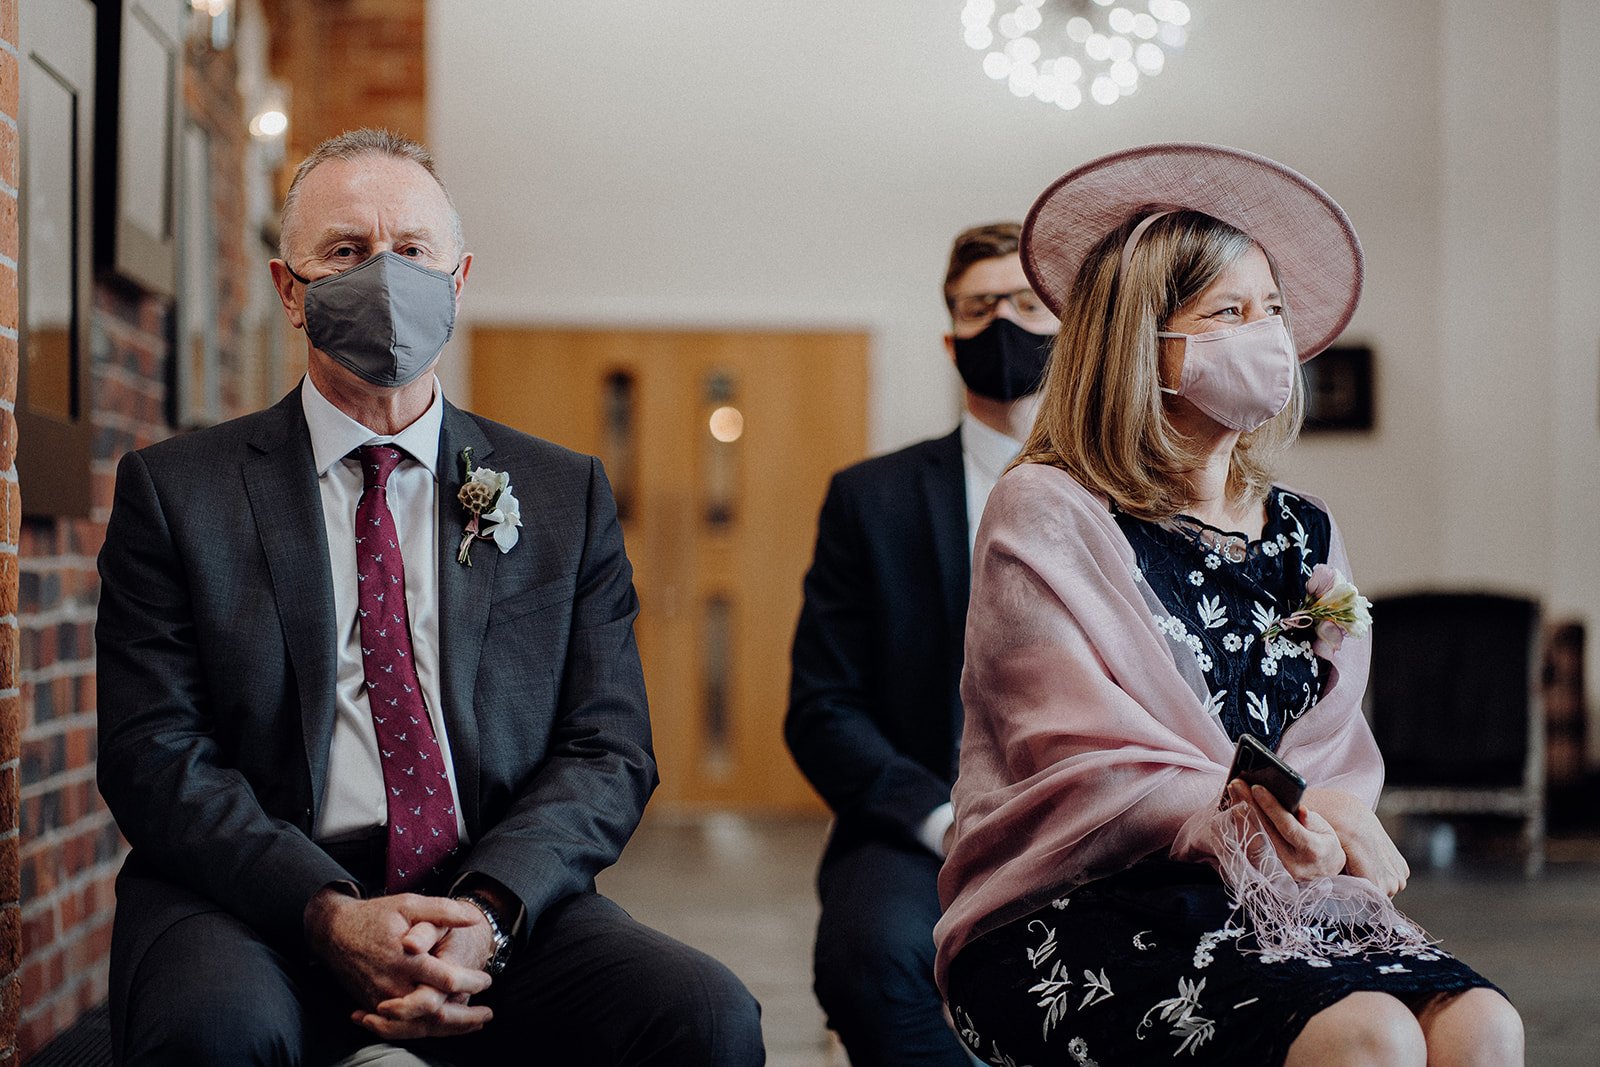 masks at wedding ceremony